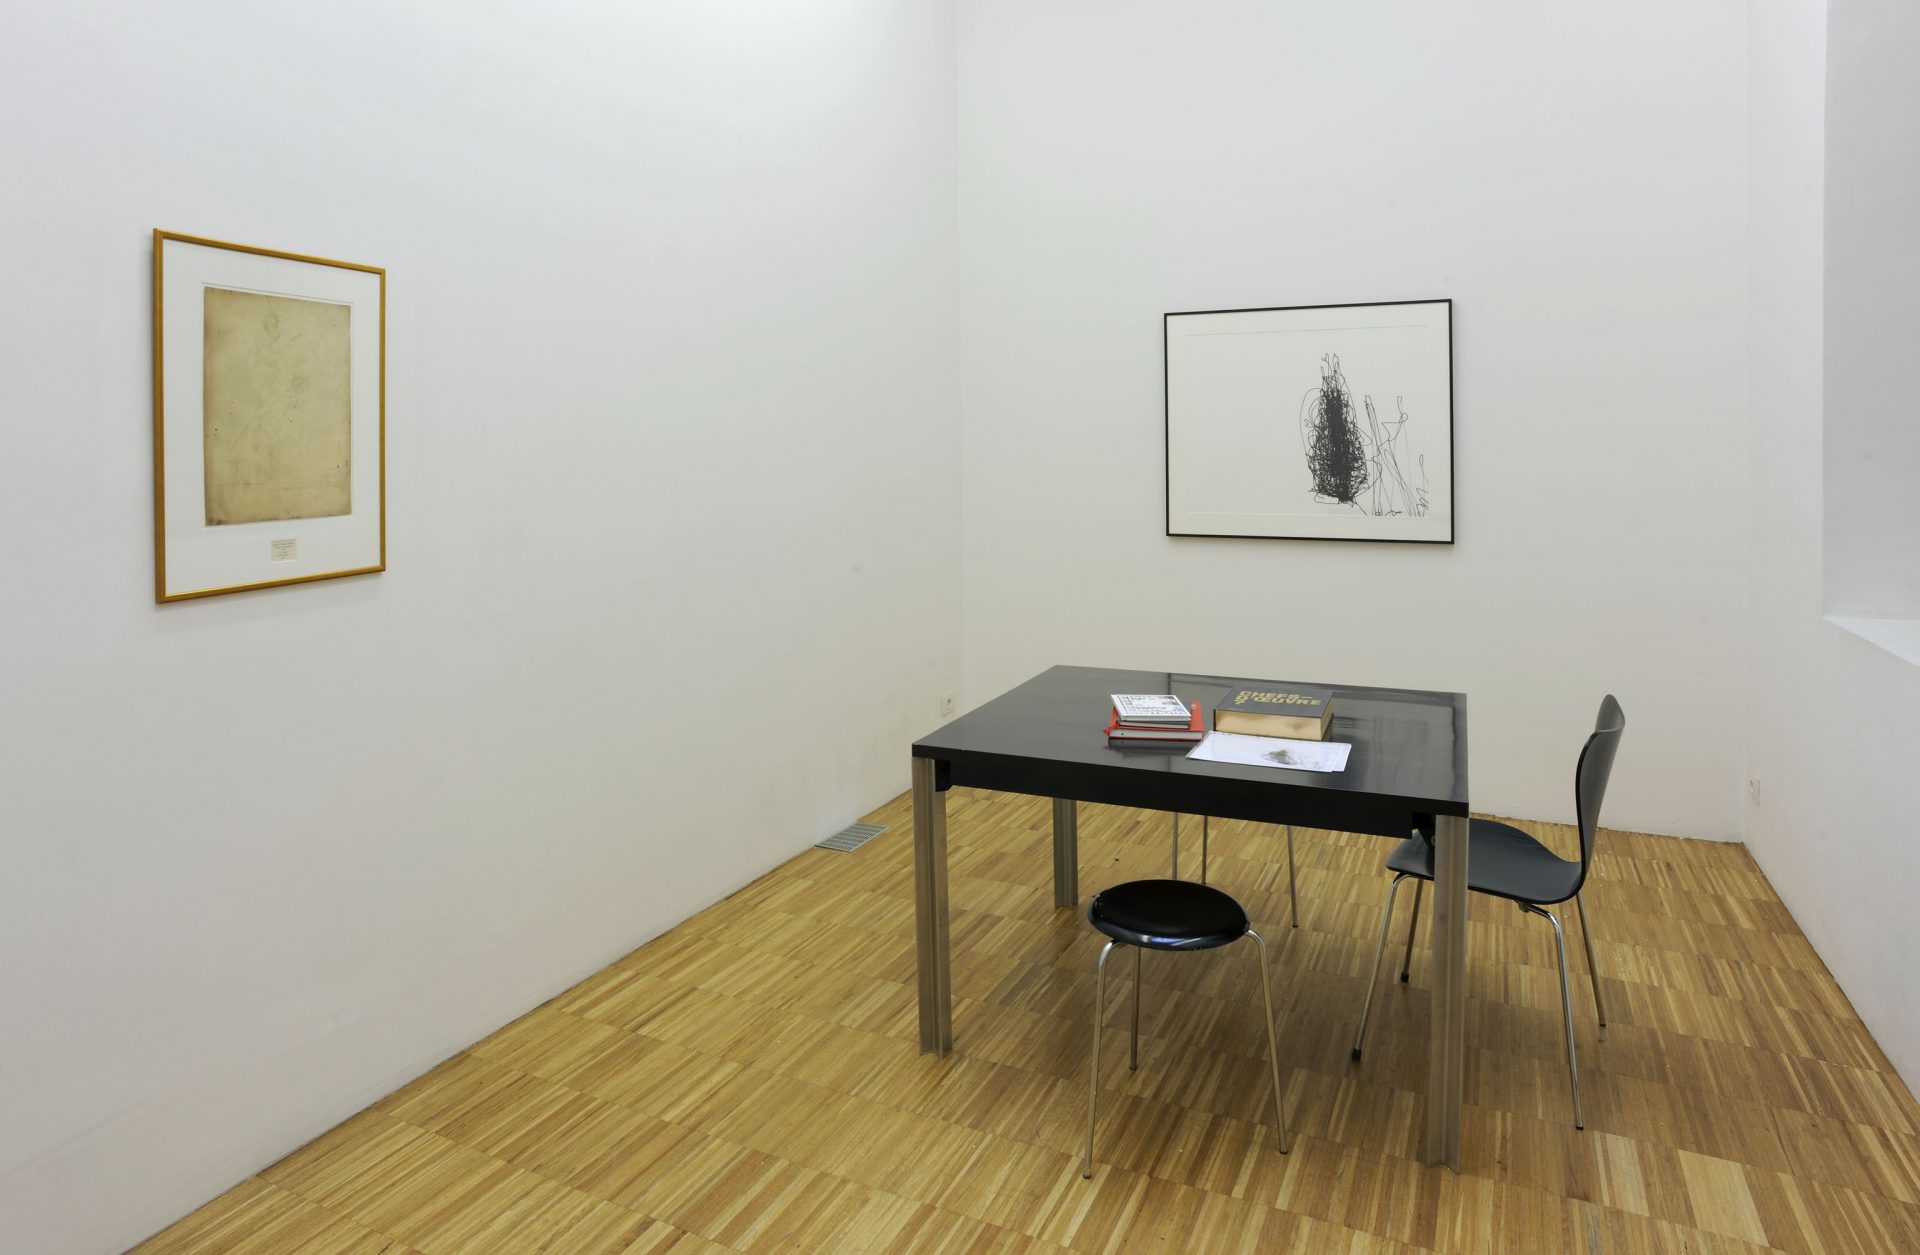 Pierre Bismuth, Le Versant de l'Analyse, installation view at Jan Mot, 2010